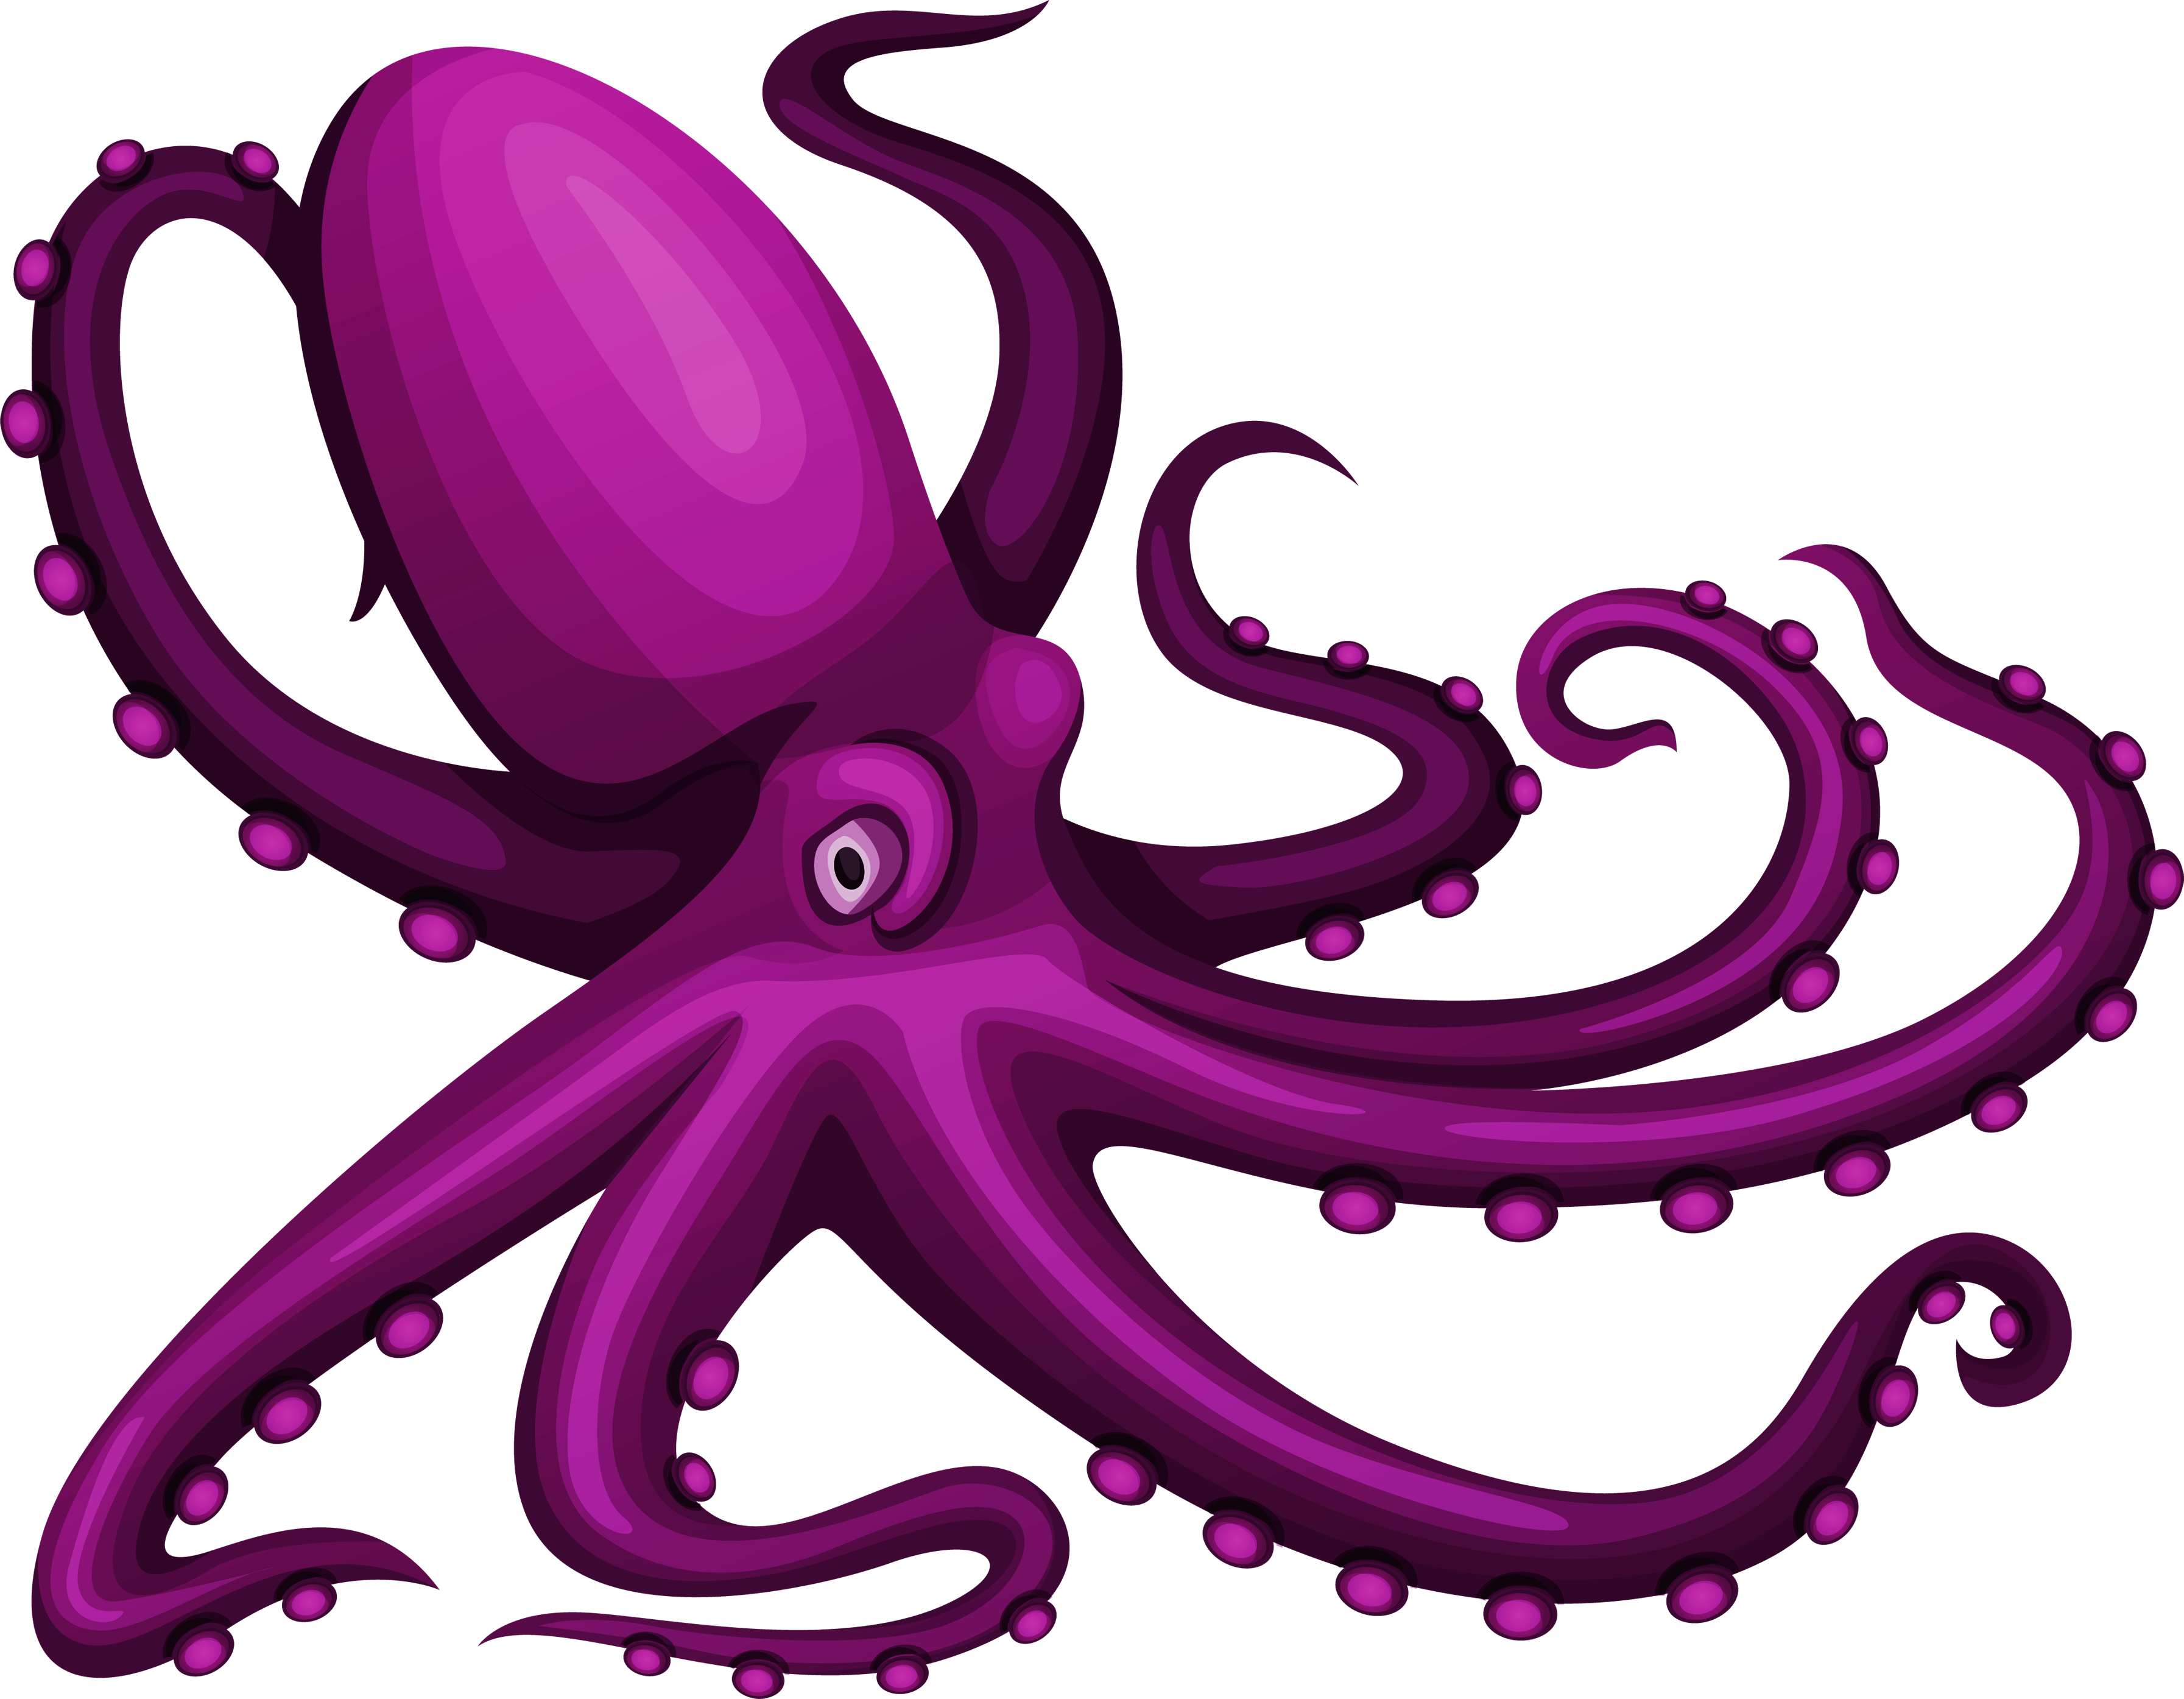 octopus clipart